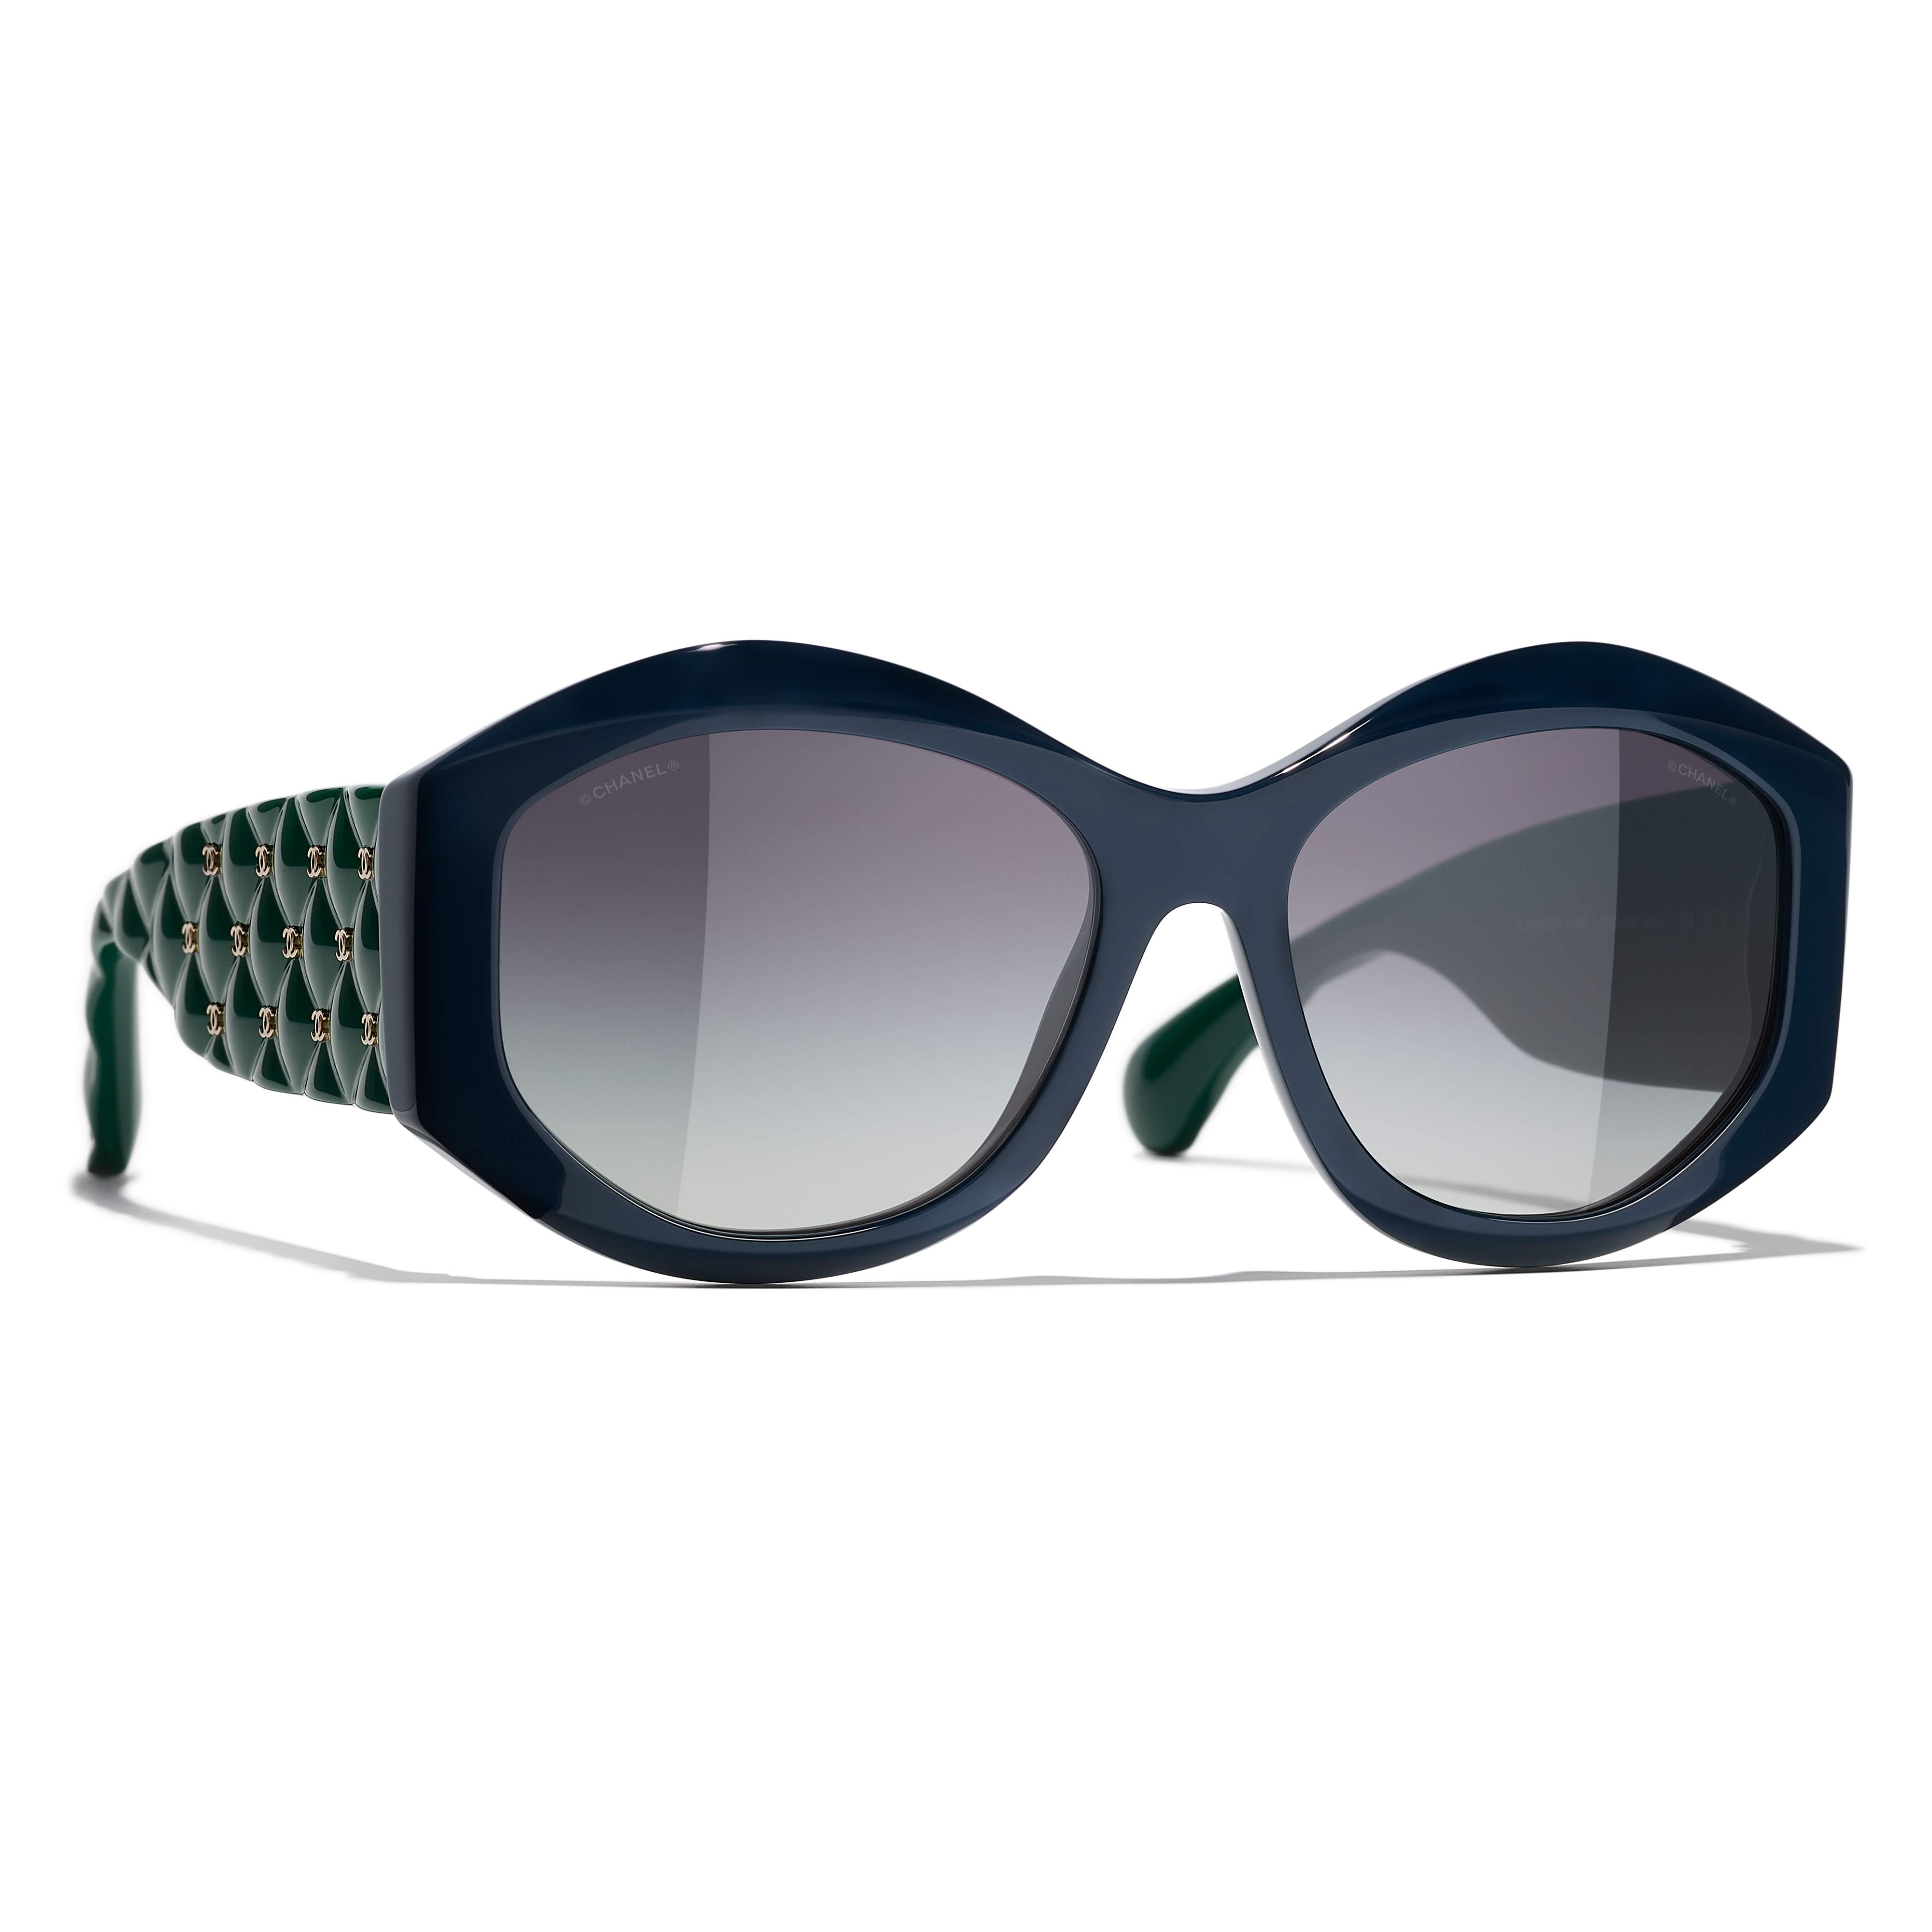 Sunglasses CHANEL CH5486 1659/S6 56-17 Blue in stock | Price 262 